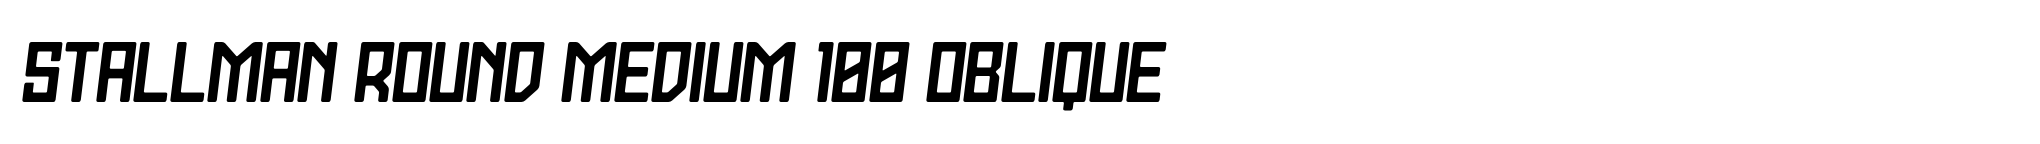 Stallman Round Medium 100 Oblique image